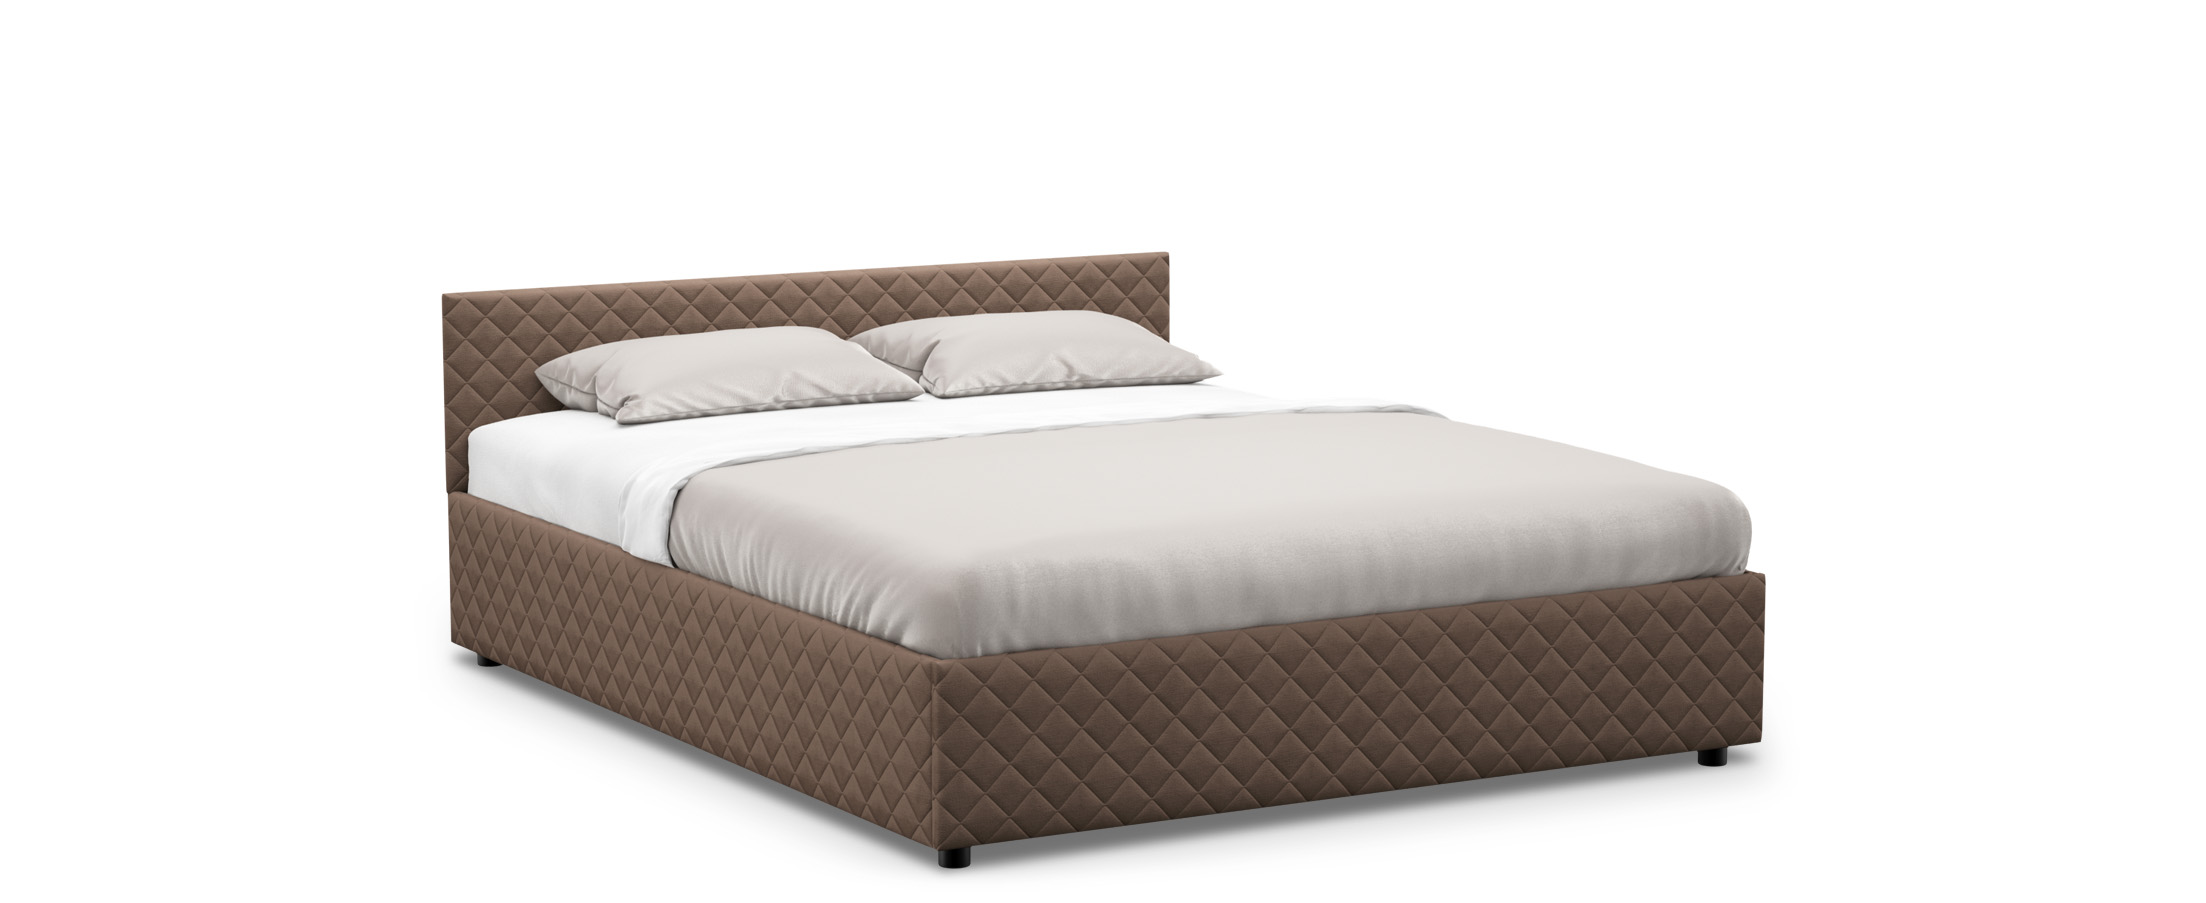 Кровать двуспальная Prima Style New 160х200 Модель 1221